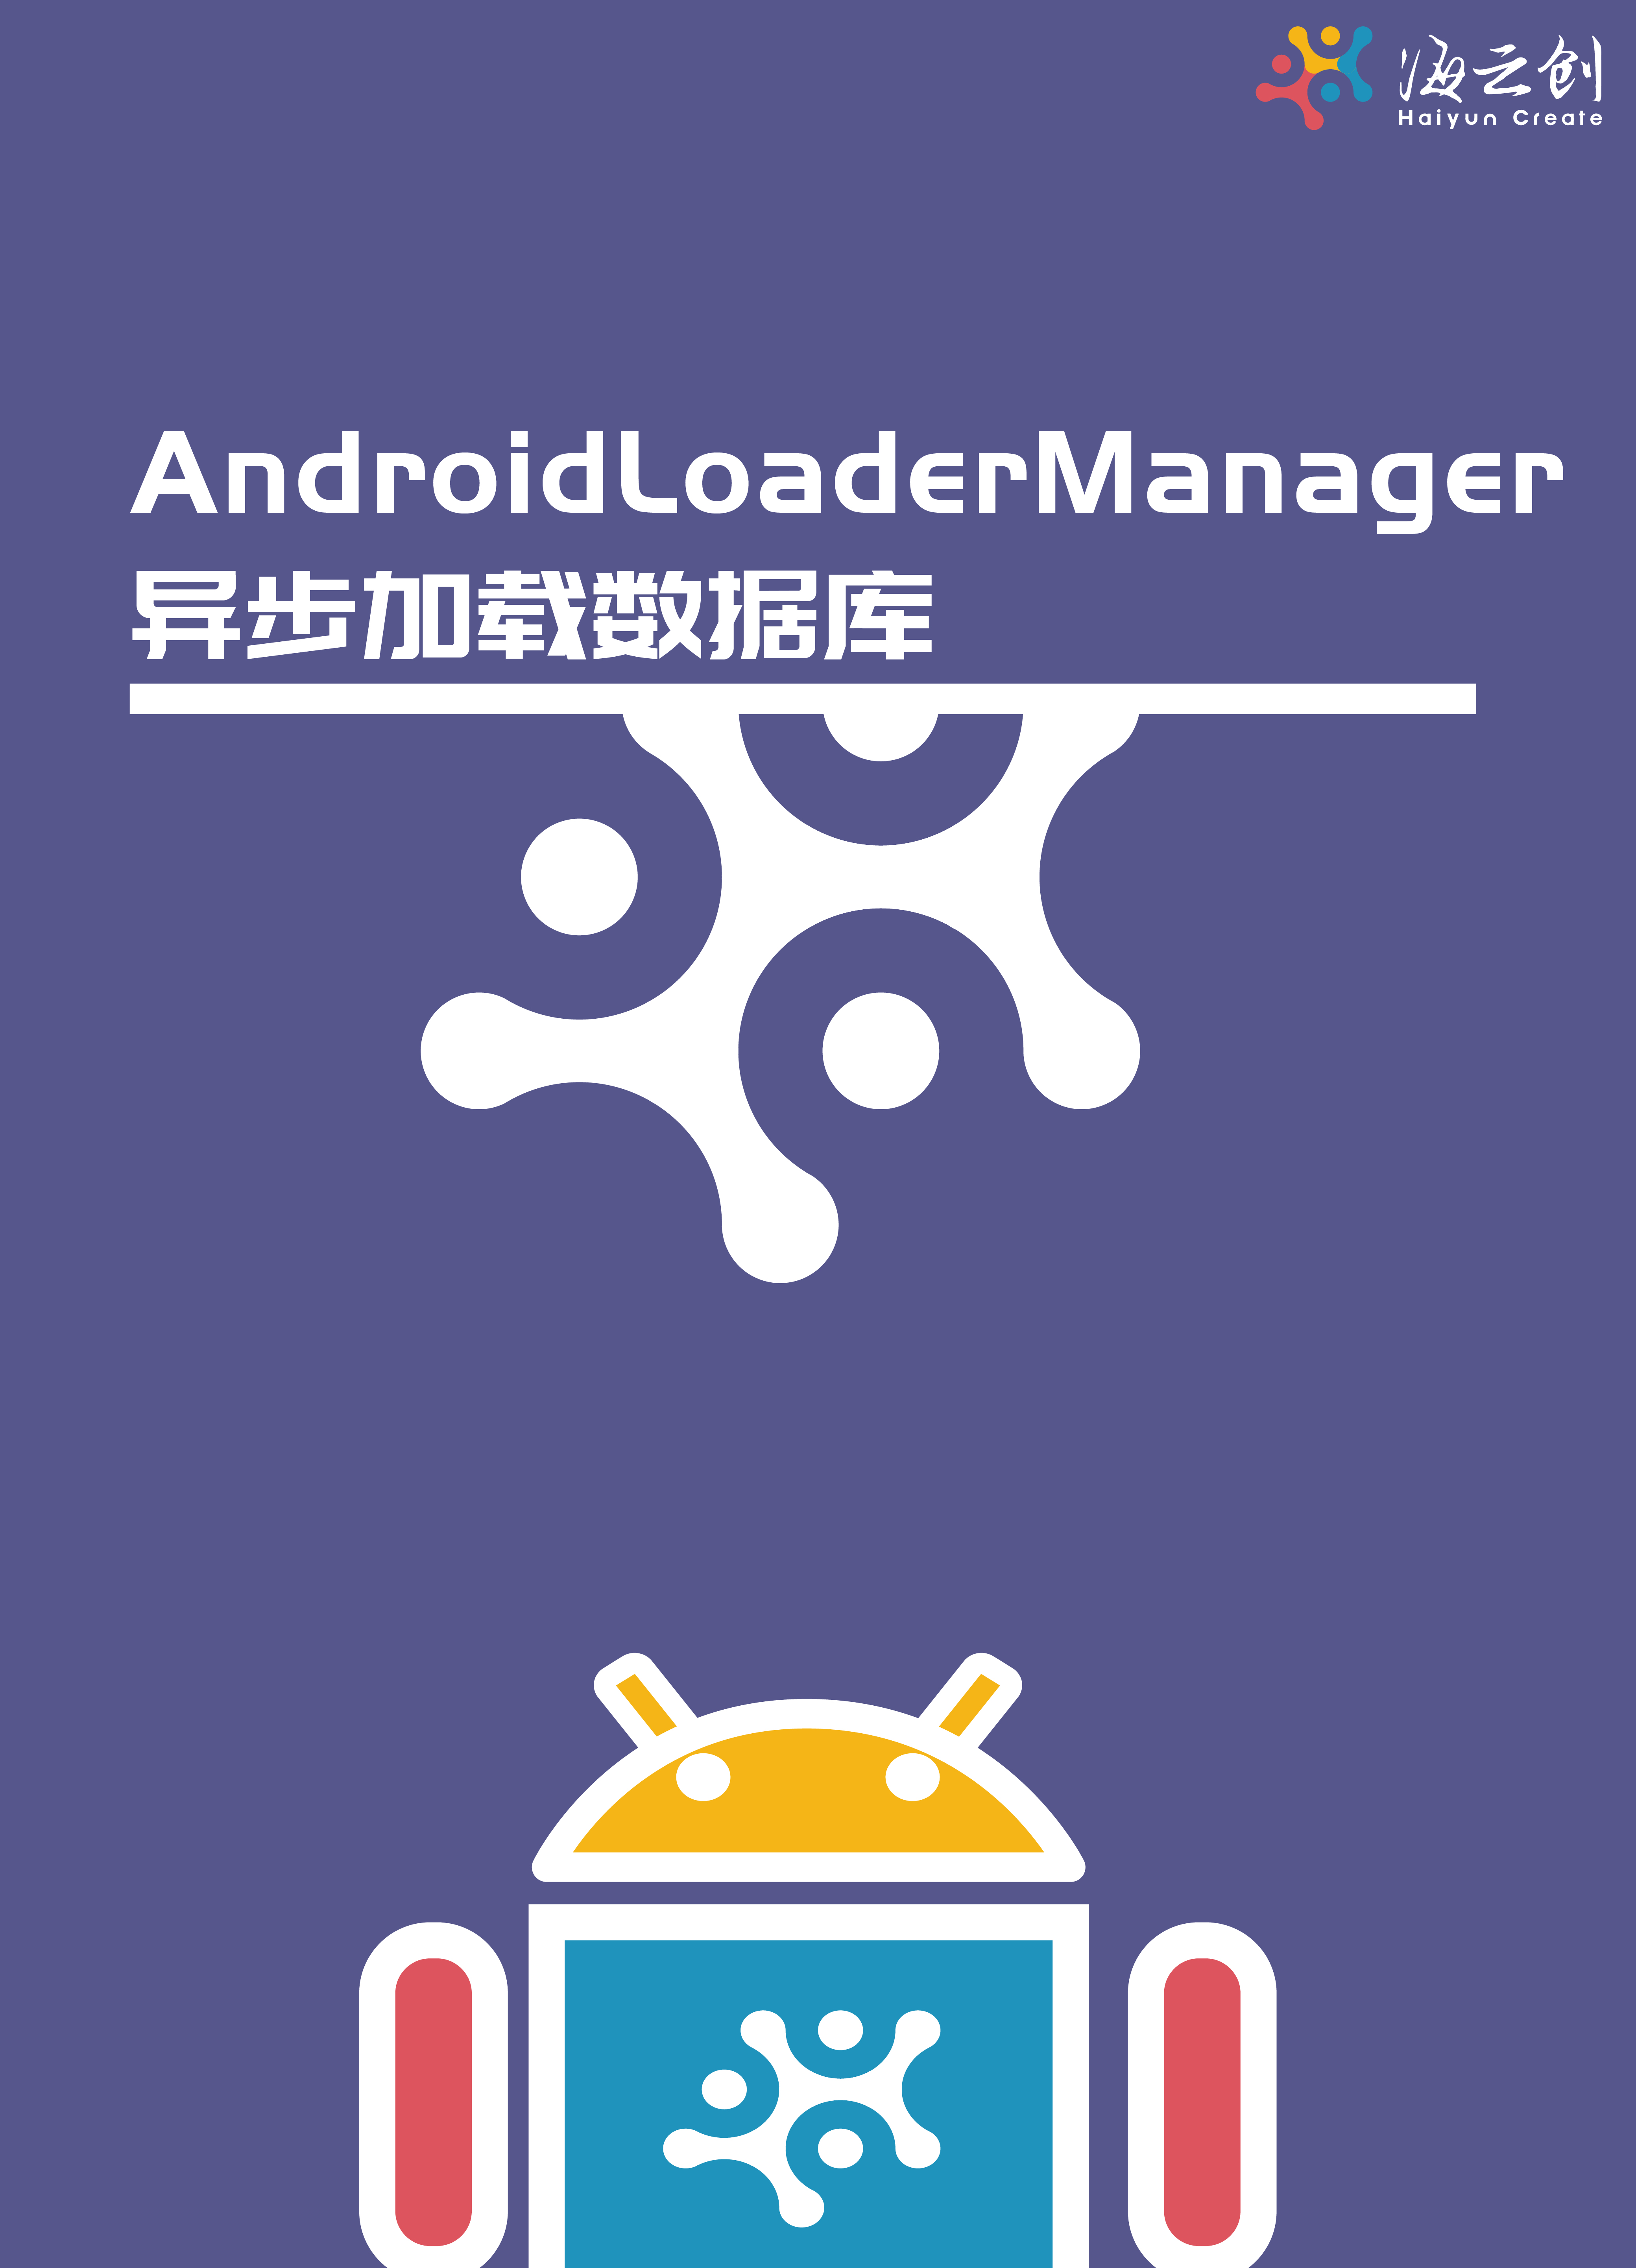 android图片加载库Glide-阿里云开发者社区